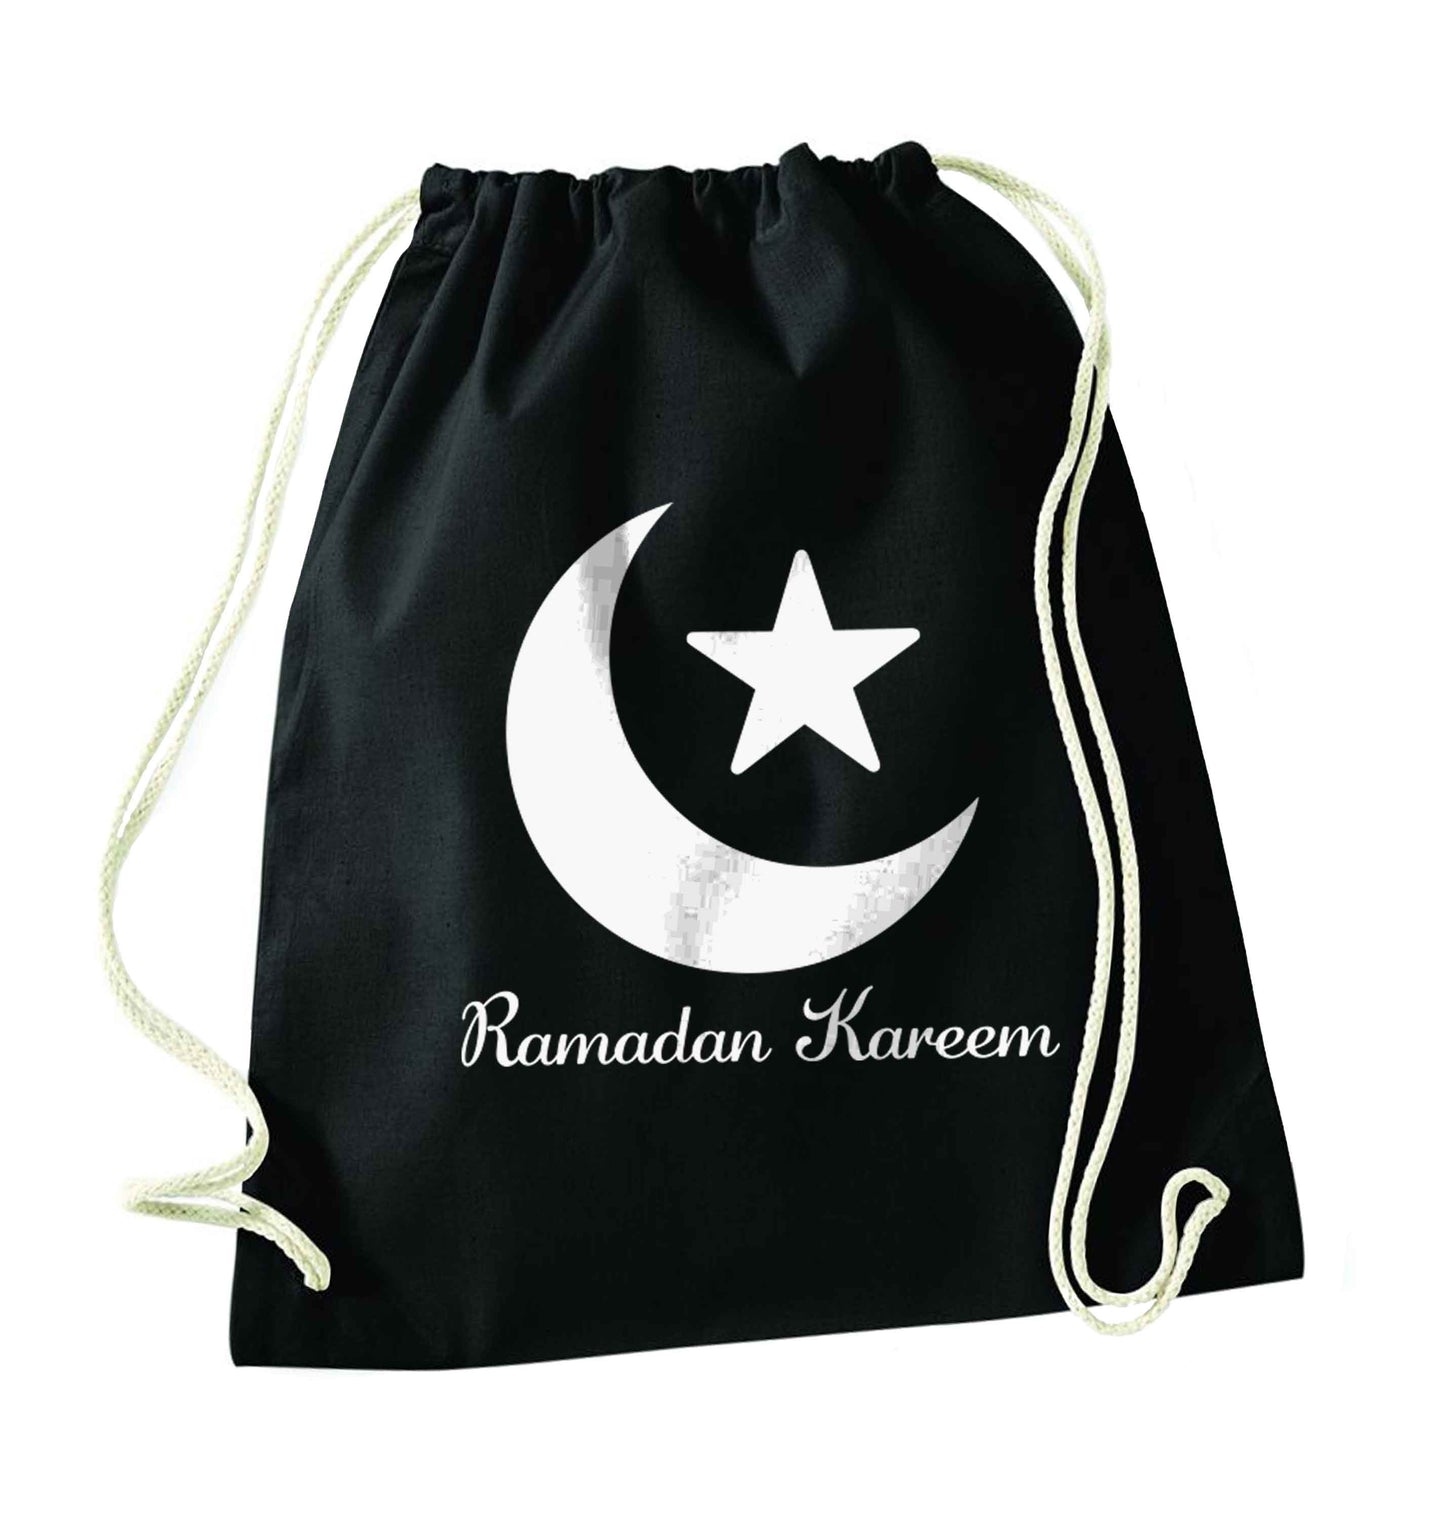 Ramadan kareem black drawstring bag